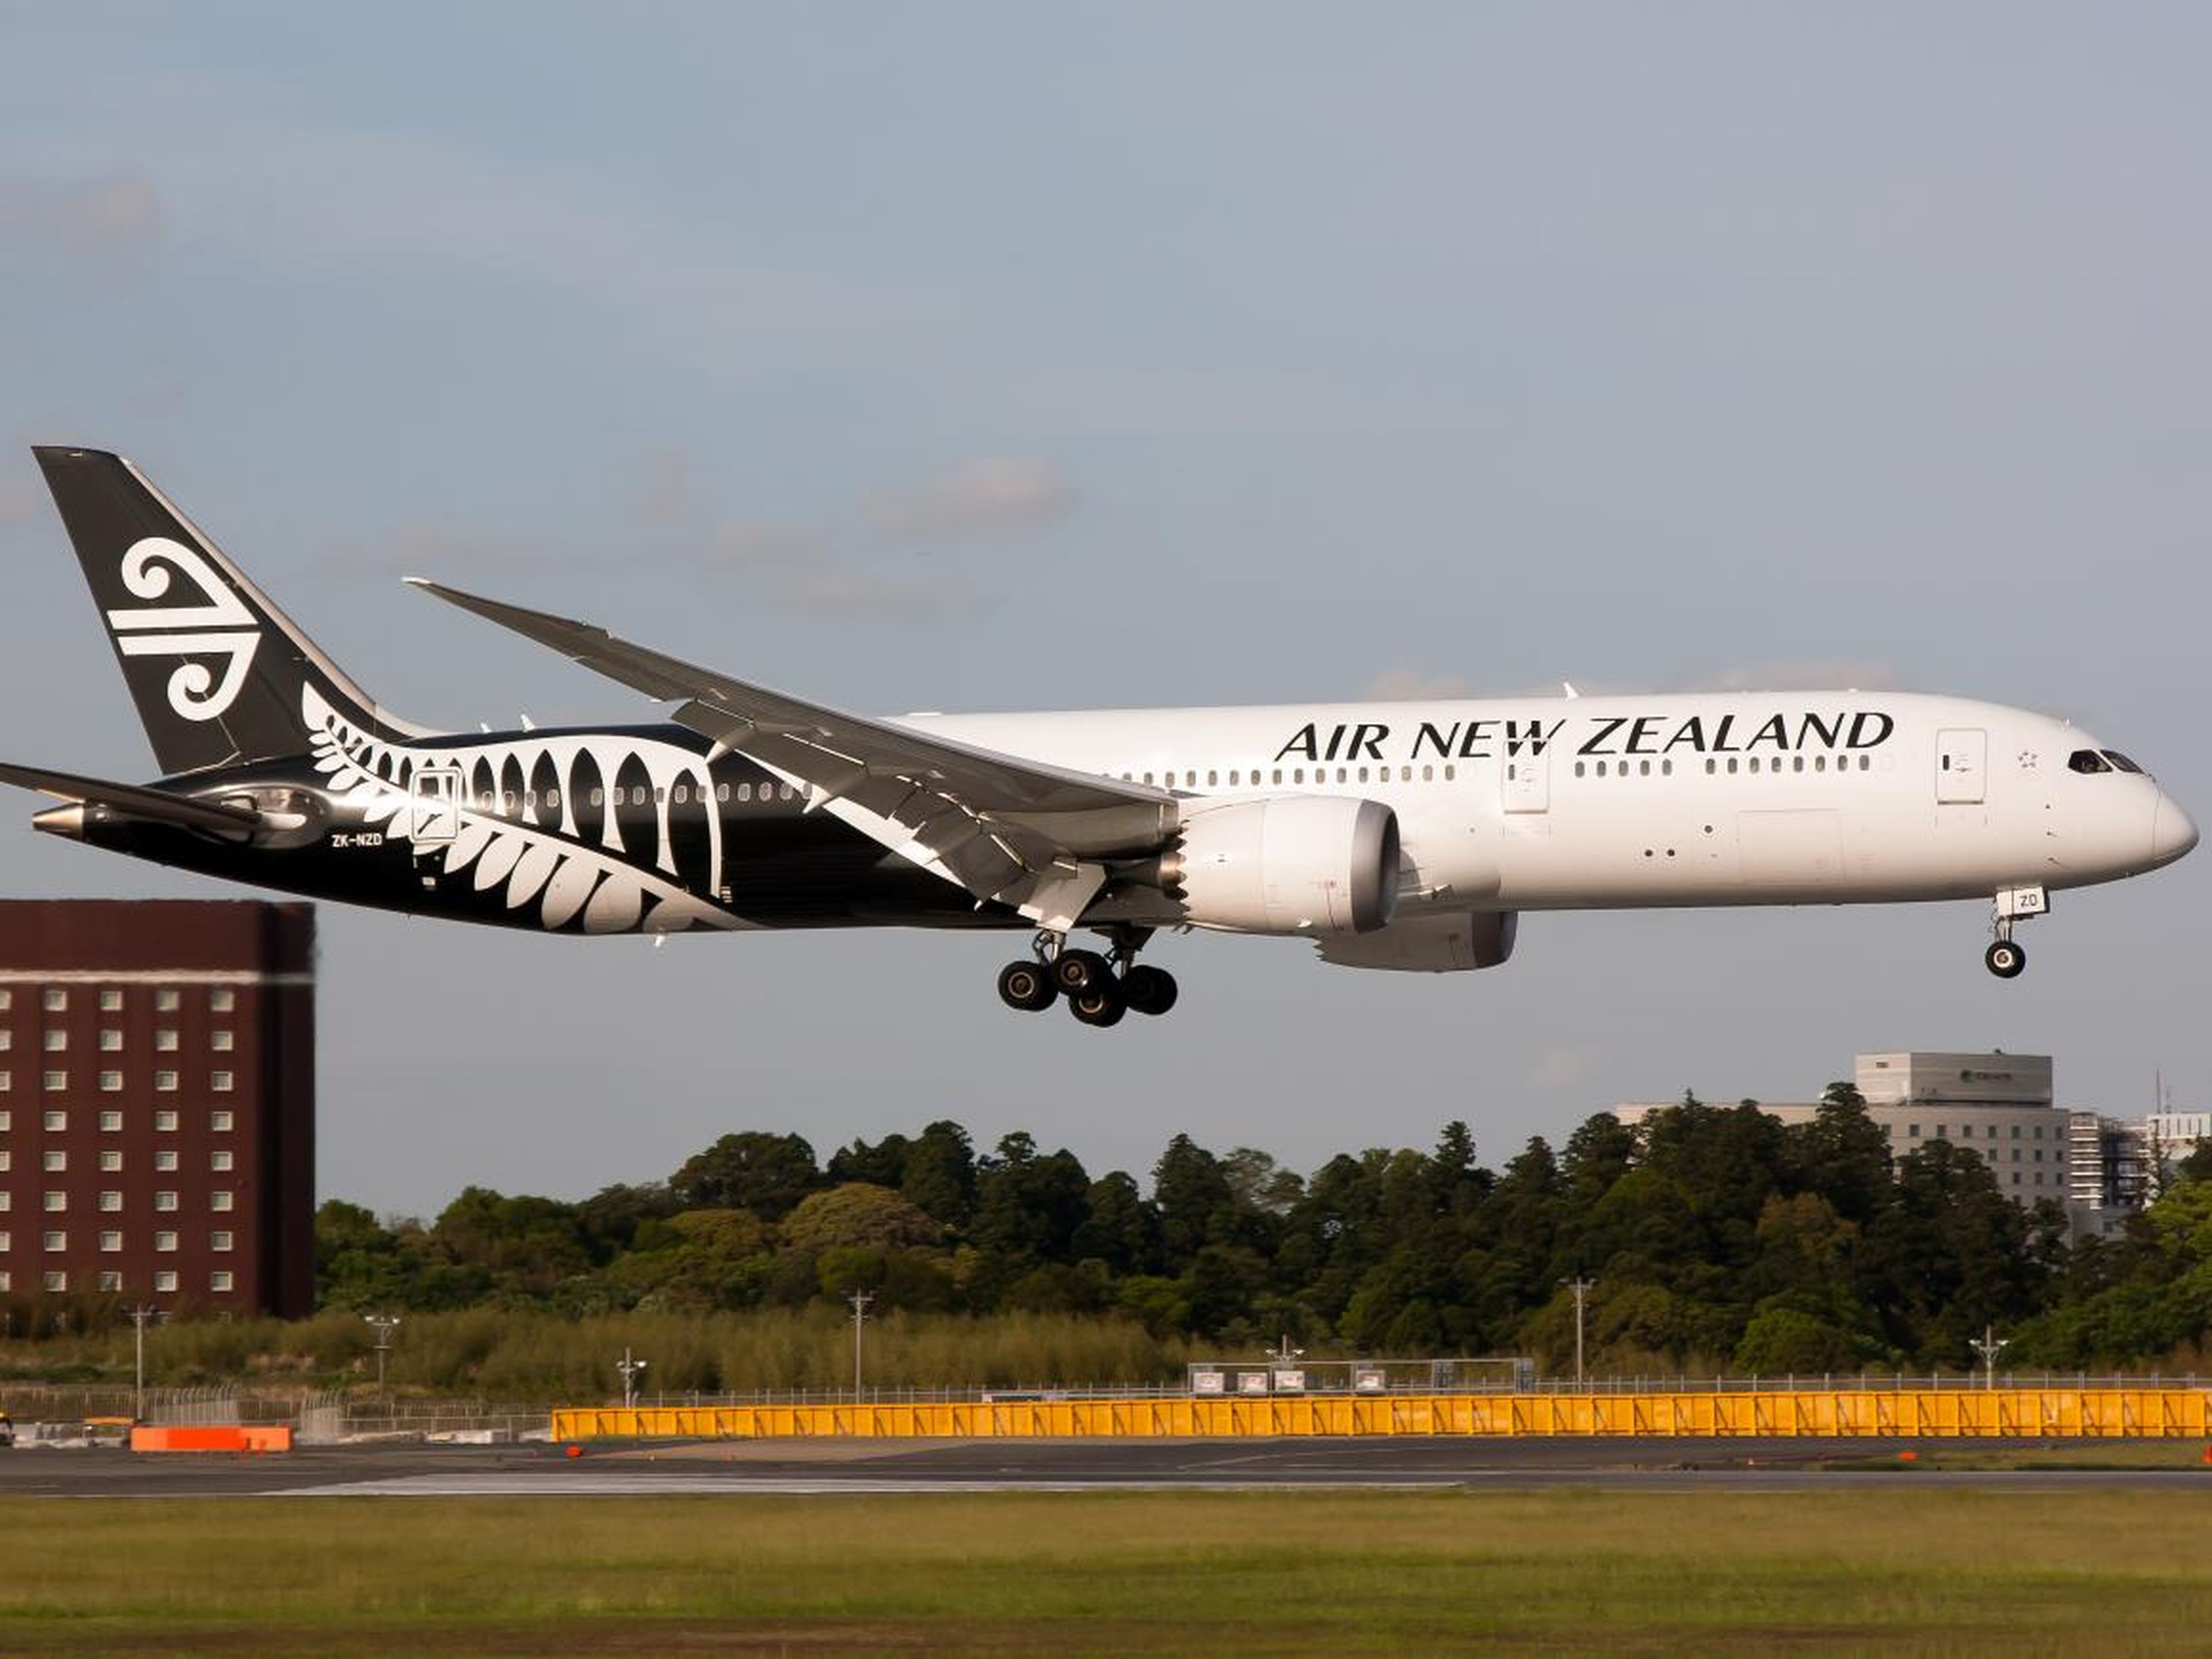 2. Air New Zealand